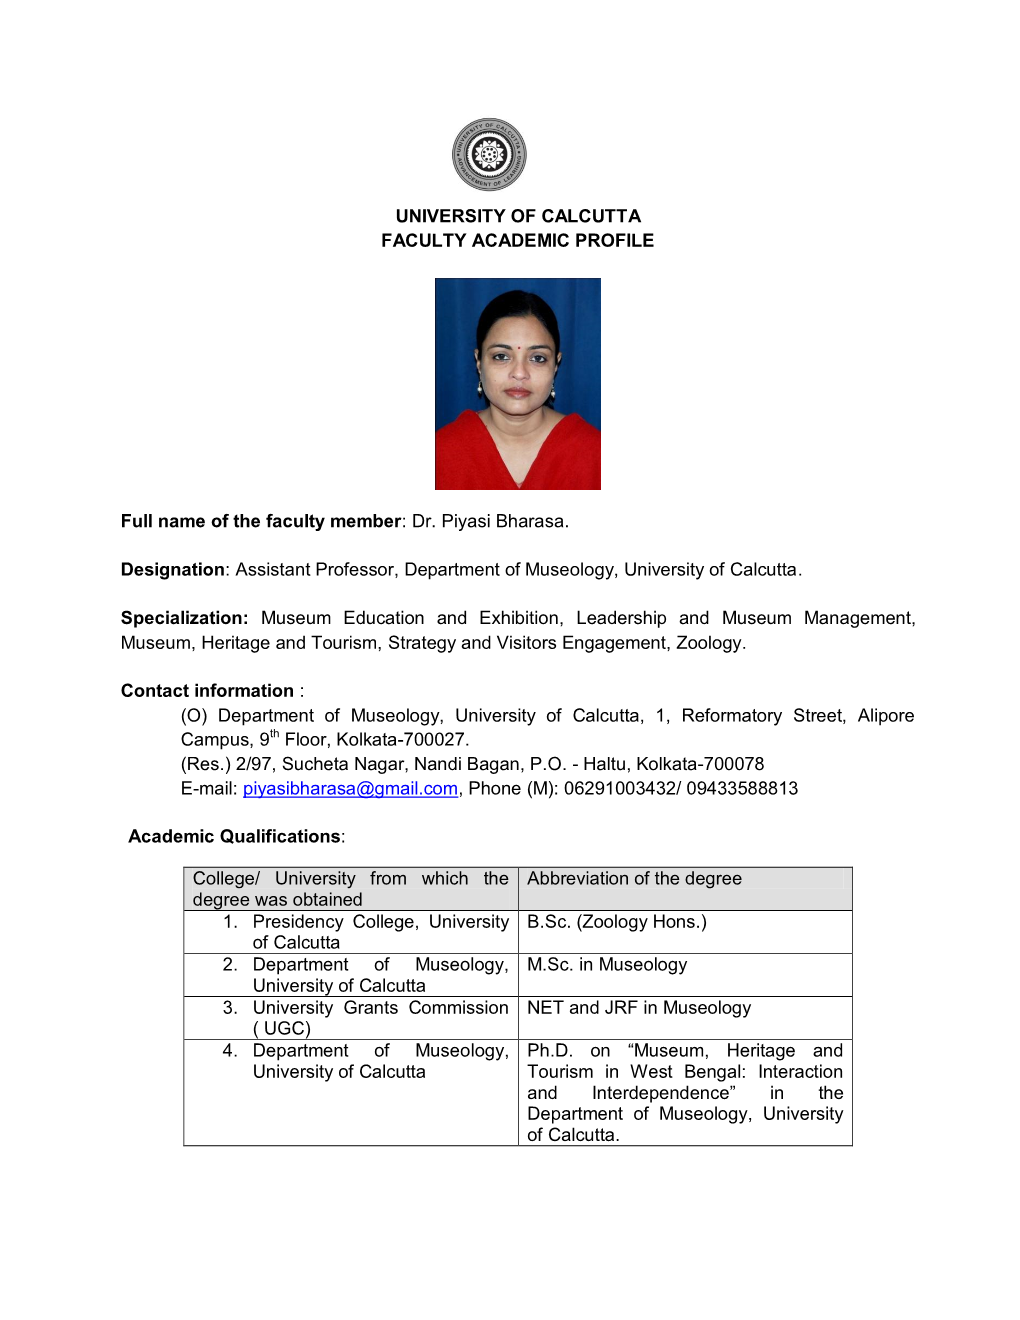 Dr. Piyasi Bharasa. Designation: Assistant